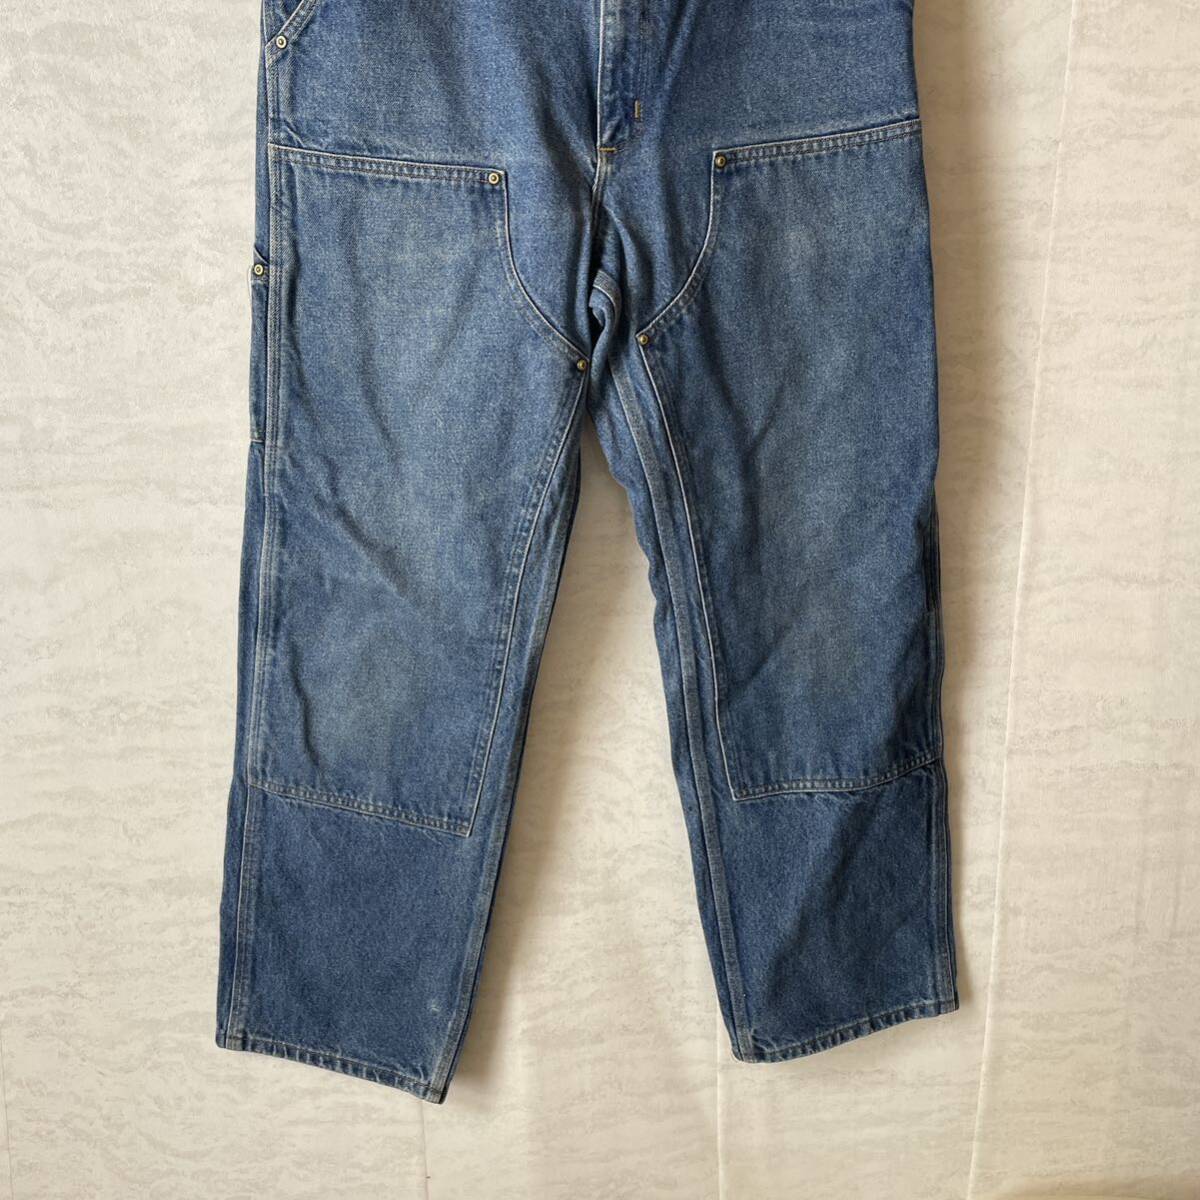 Carhartt Carhartt double knee Denim pants Vintage work pants star tag 80 period waist 88 blue Denim 90S men's old clothes 